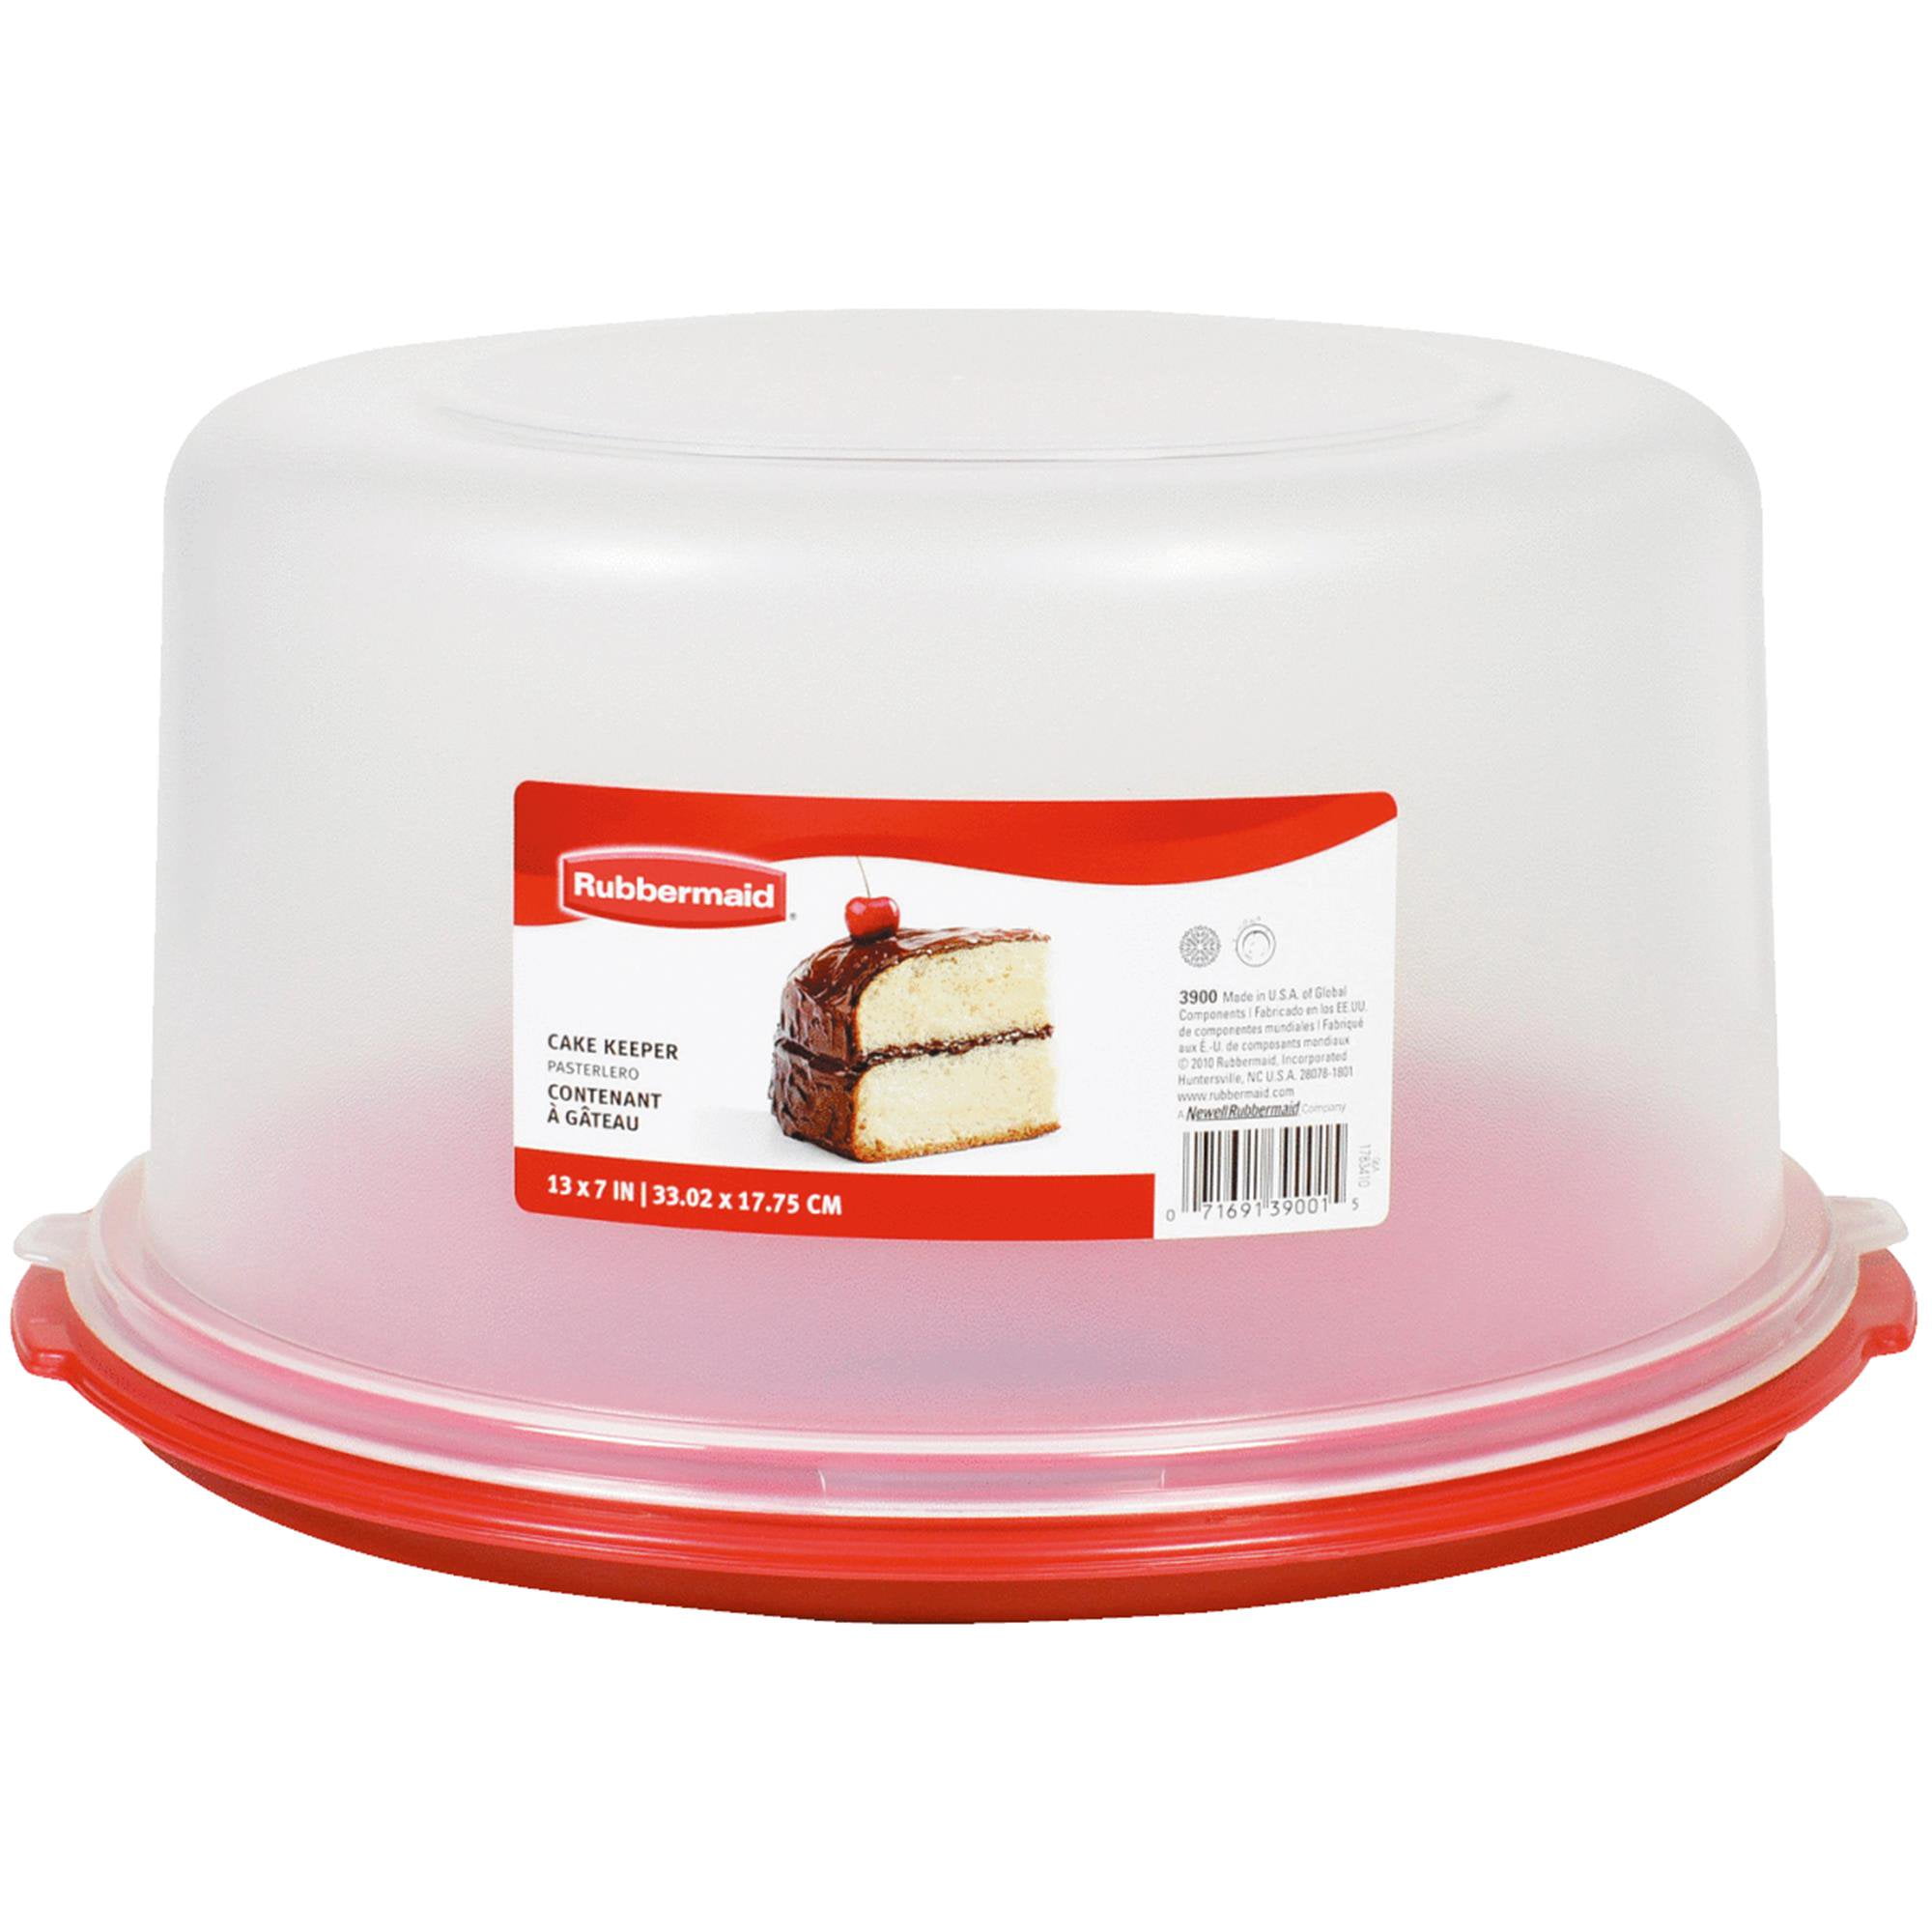 Brownie Traybake Cake Slice Luxury Envelope Style Cookie and Bake Box 